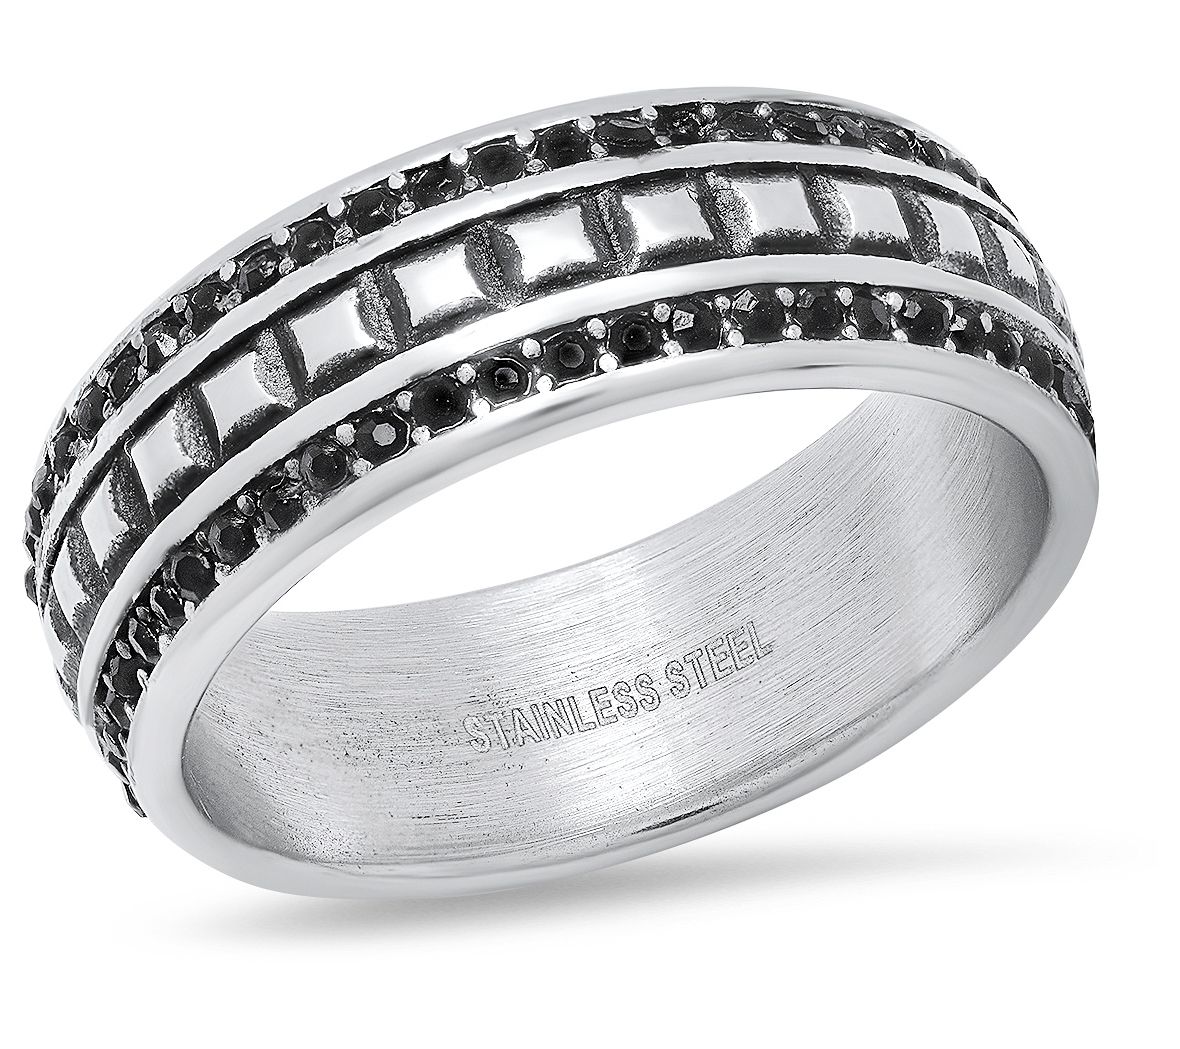 Steel By Design Men's Center Design Cubic Zirconia Band Ring